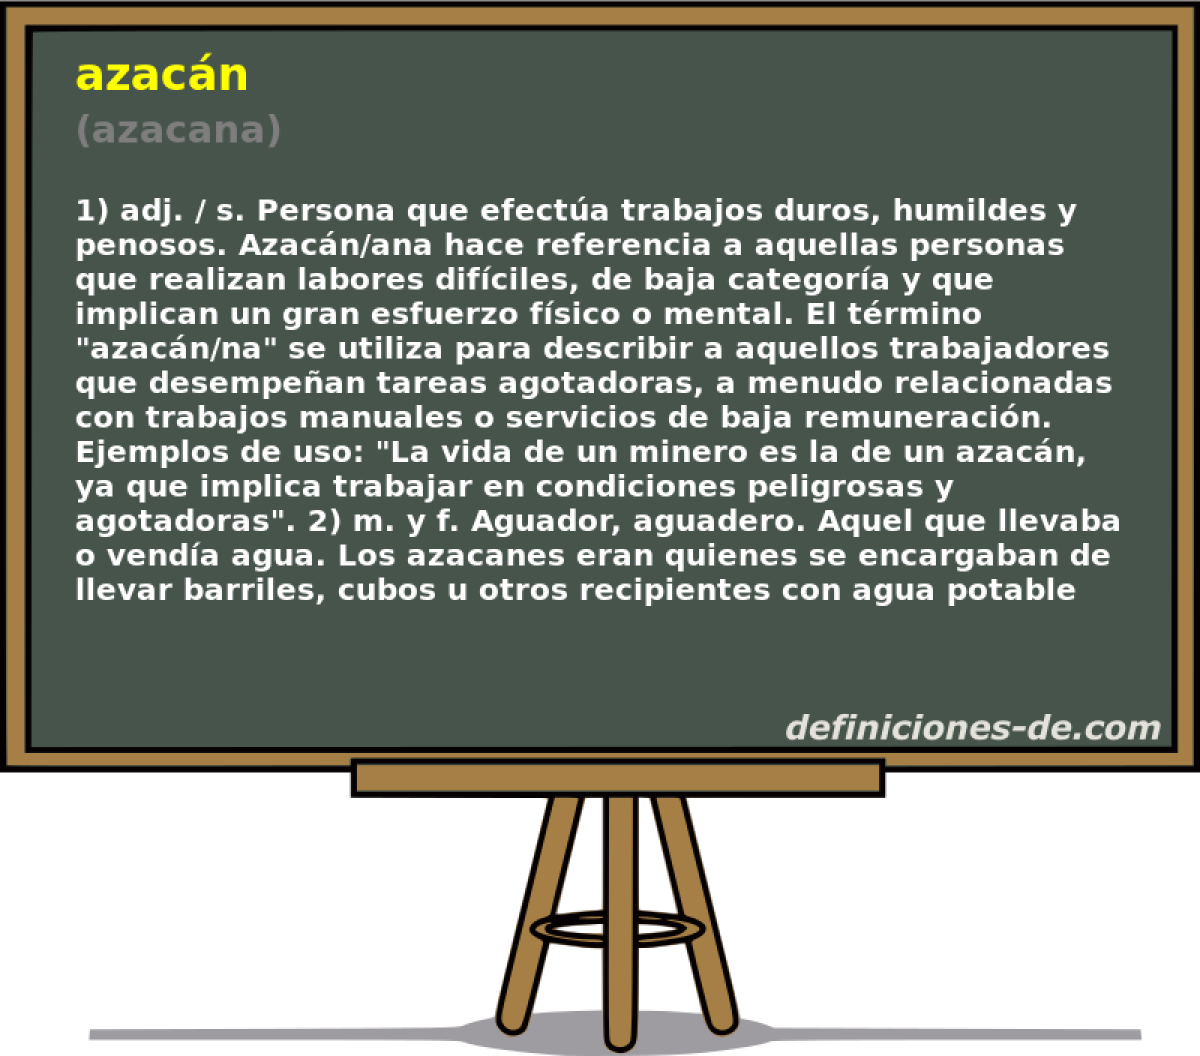 azacn (azacana)